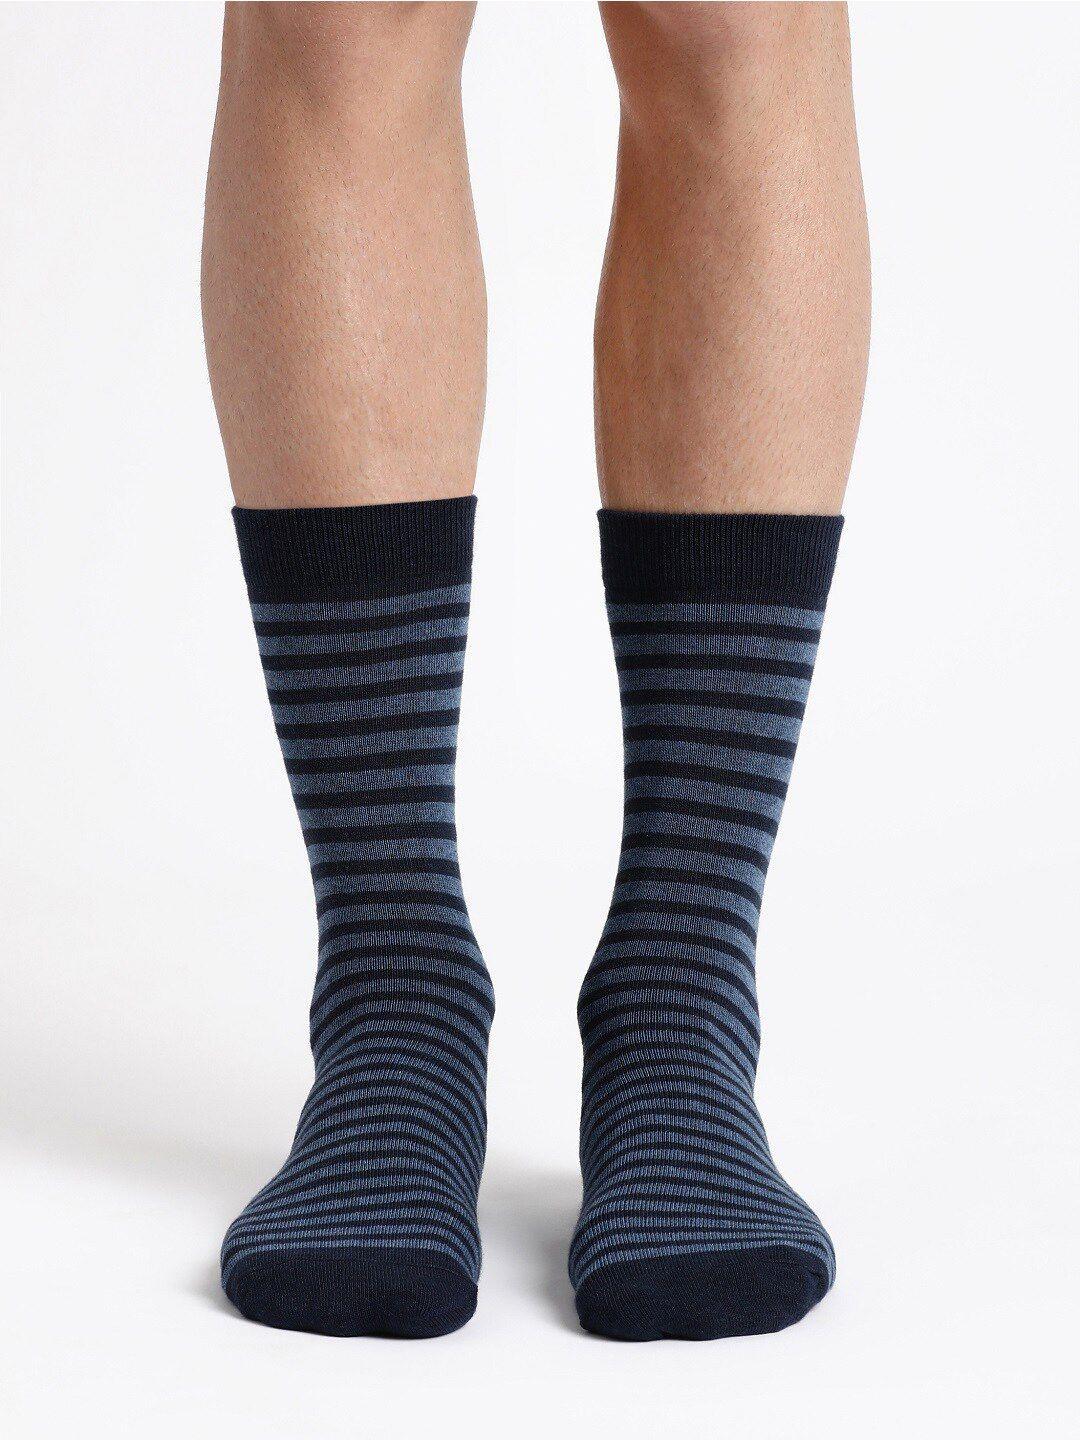 Jockey Men Navy Blue Striped Printed Calf-Length Socks